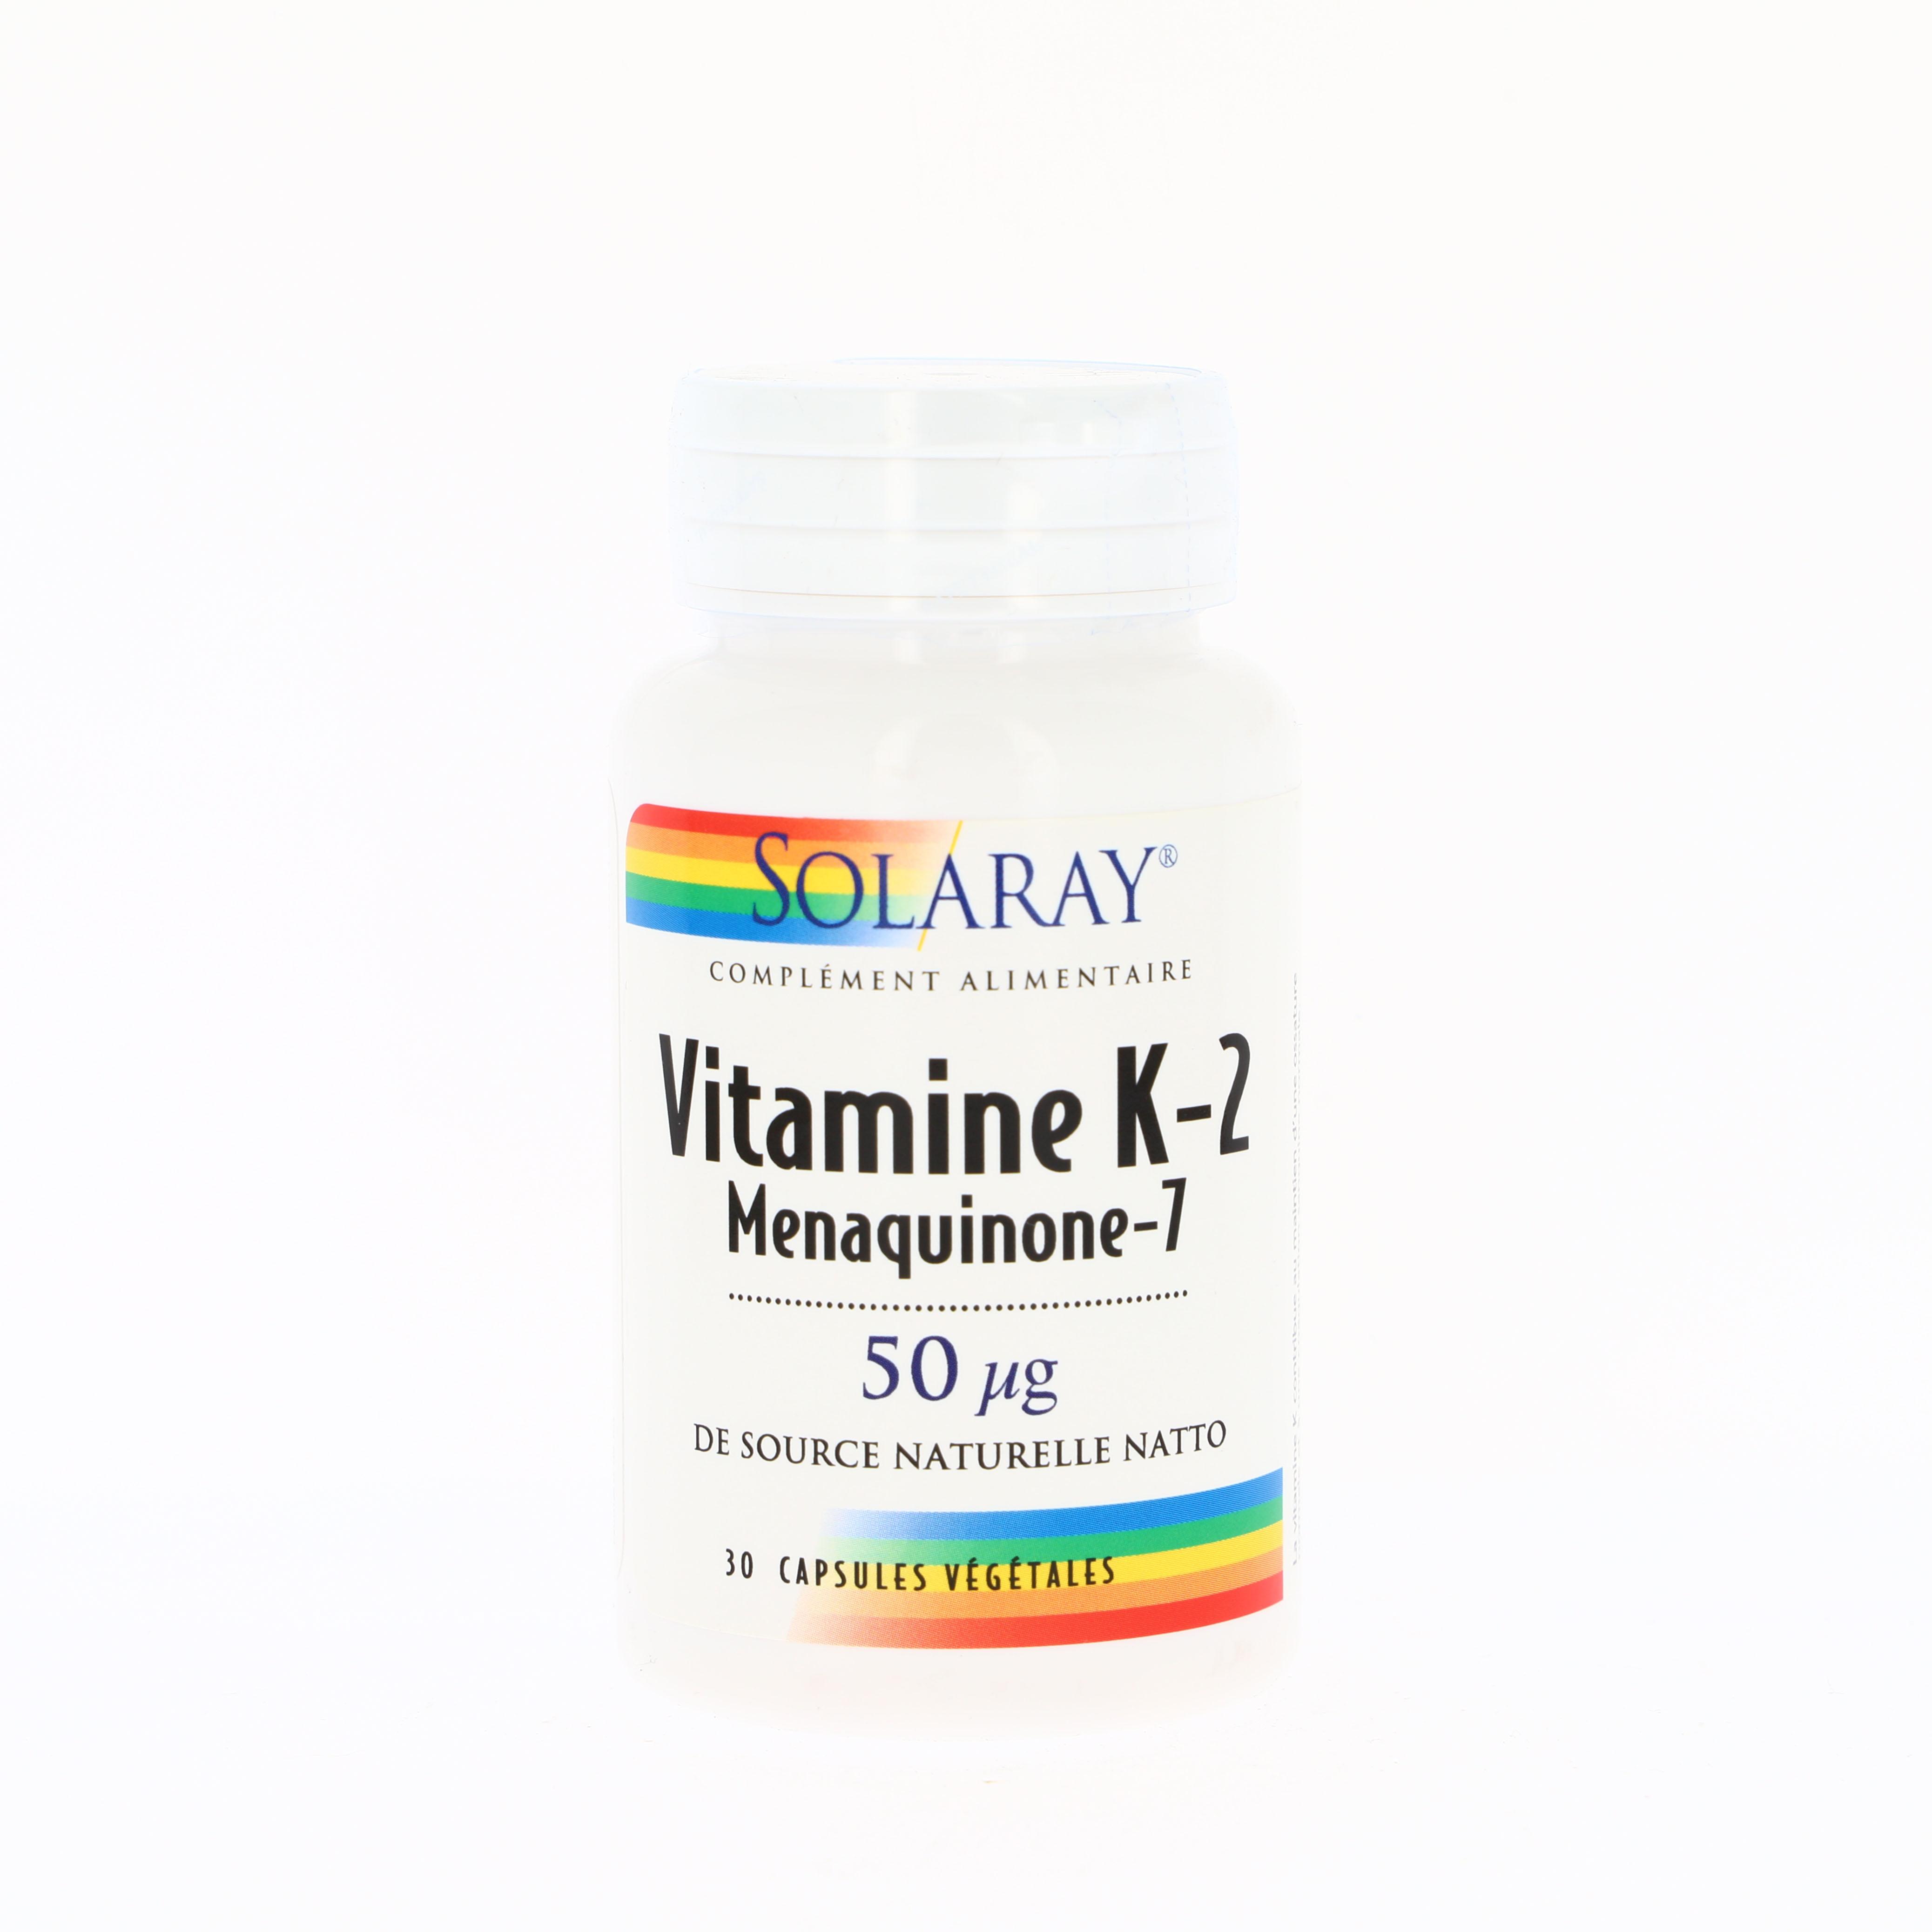 Vitamine K2 (menaquinone-7) de source naturelle natto 50 µg - 30 caps. vég.